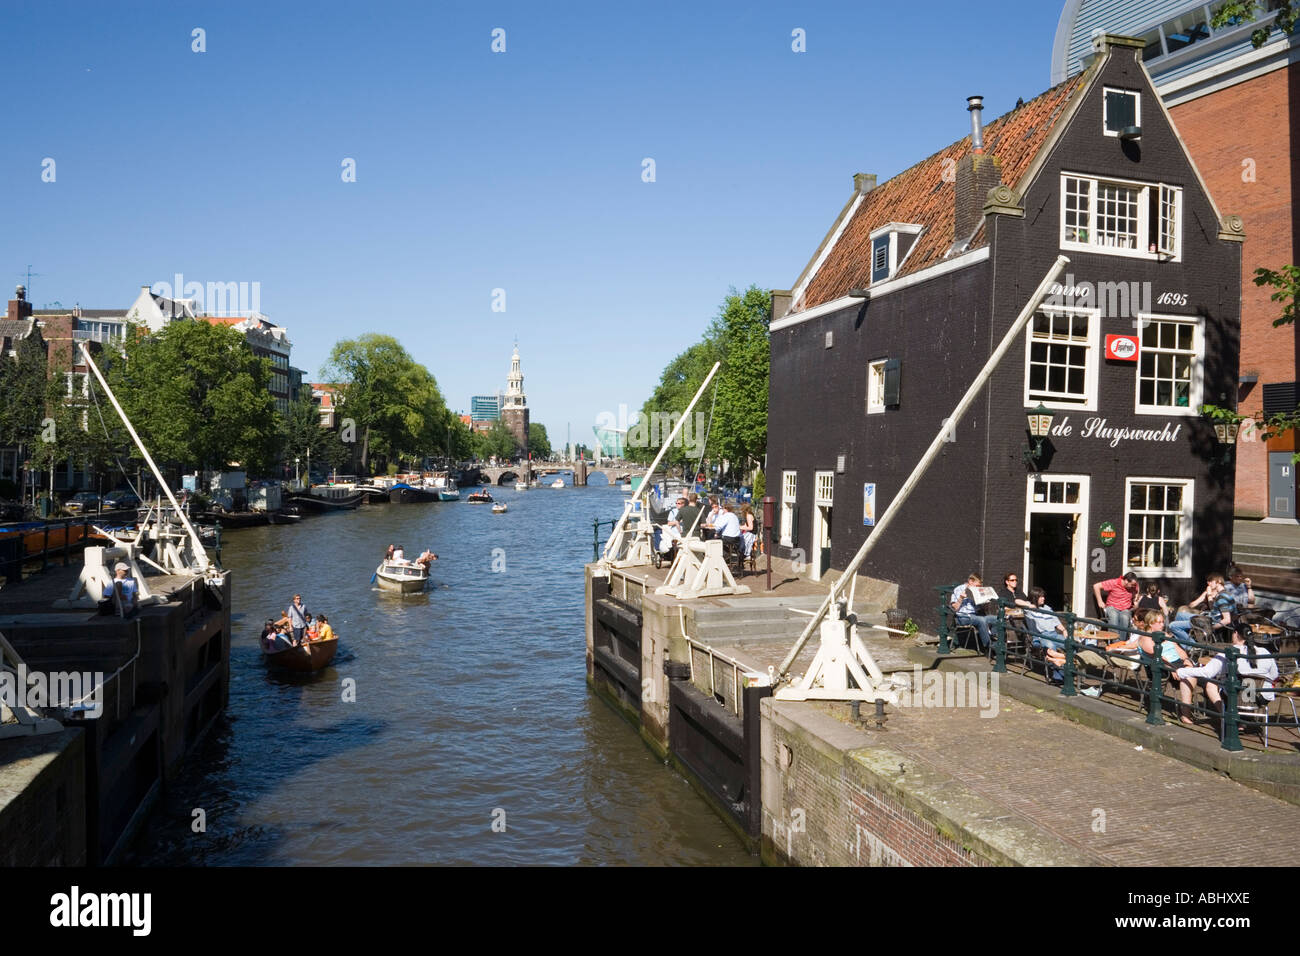 Il Cafe de Slujswacht un tipico brown cafè a canal Oude Schans Amsterdam Olanda Paesi Bassi Foto Stock